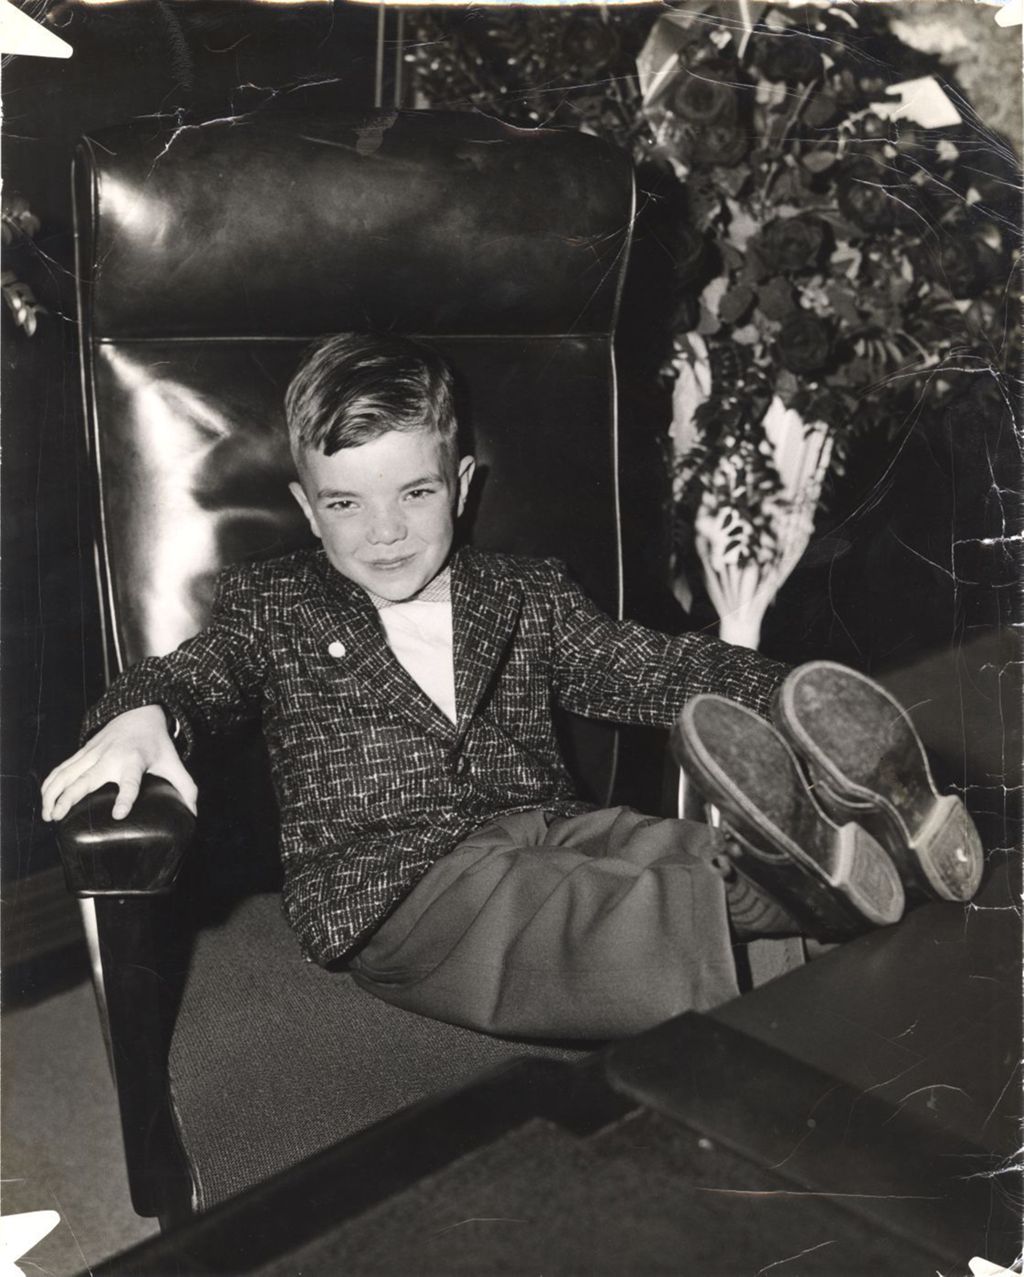 Miniature of John Daley in Mayor's chair